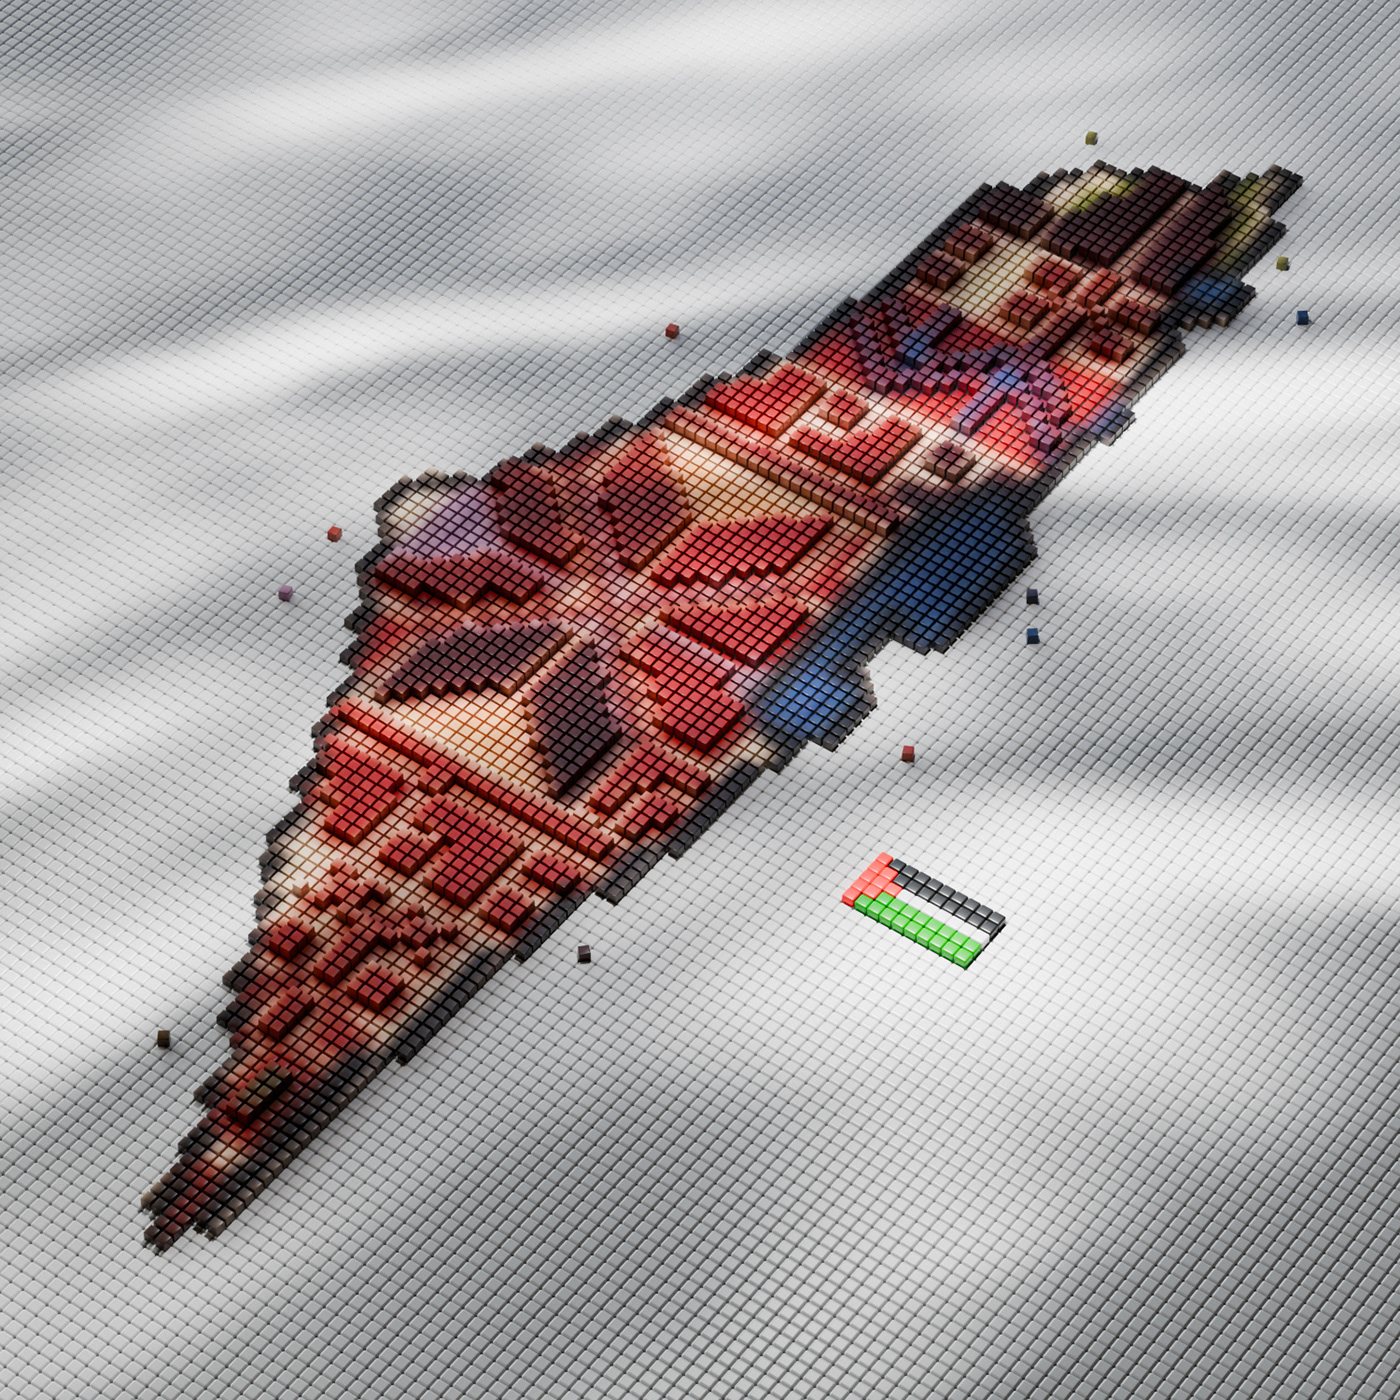 3D Render modern palestine gaza freedom Digital Art  Pixel art ILLUSTRATION  artwork